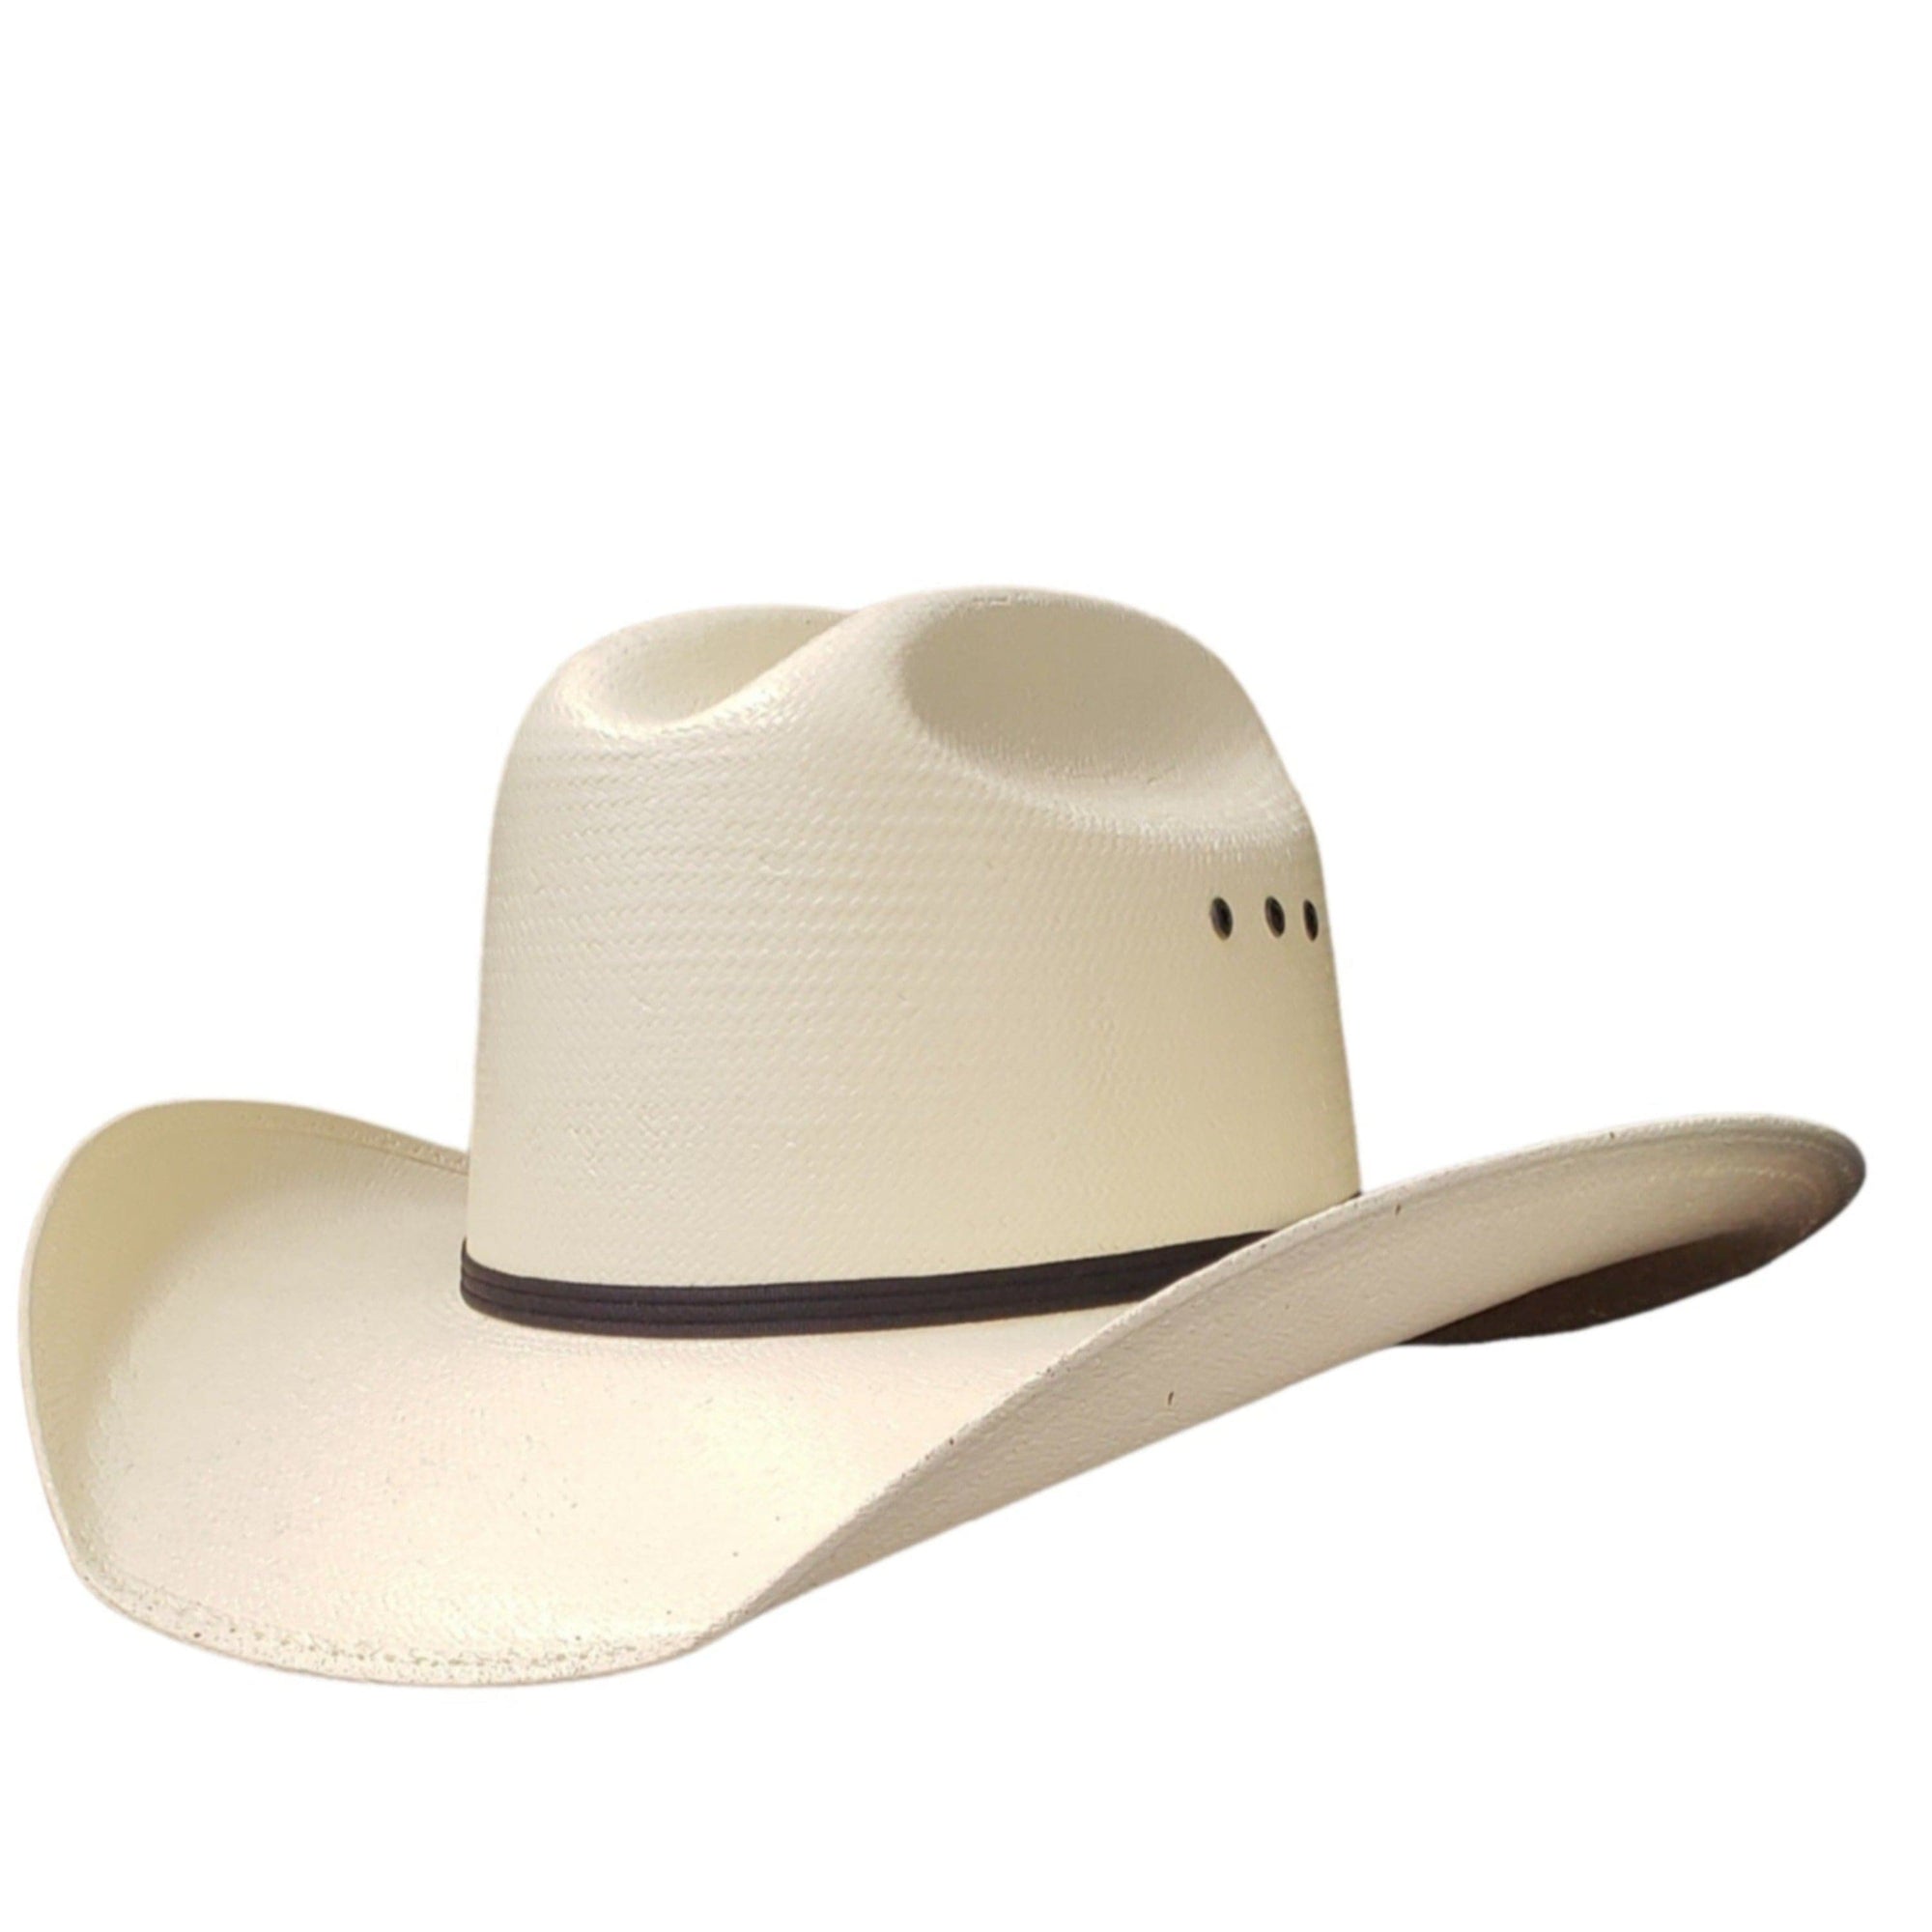 Gone Country Hats Men & Women's Hats Open Range Ivory - Straw Shantung (Yellowstone Series)